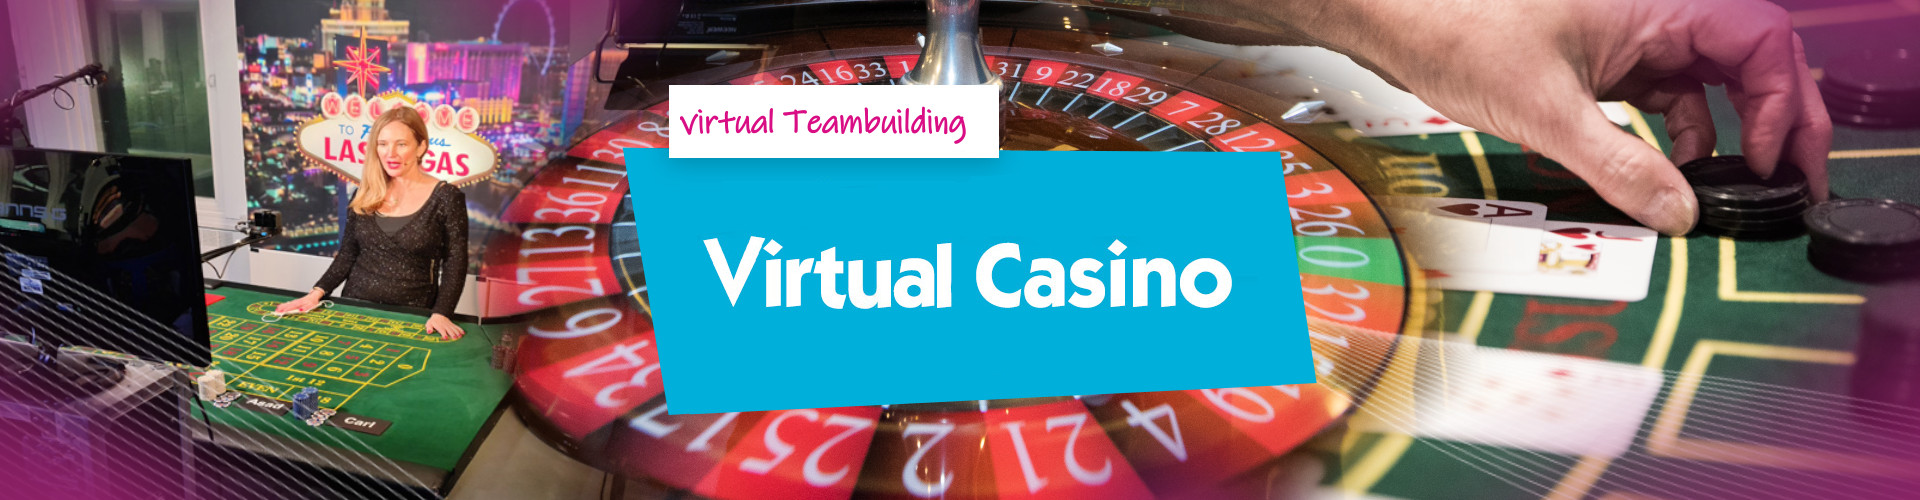 Virtual Casino - Banner